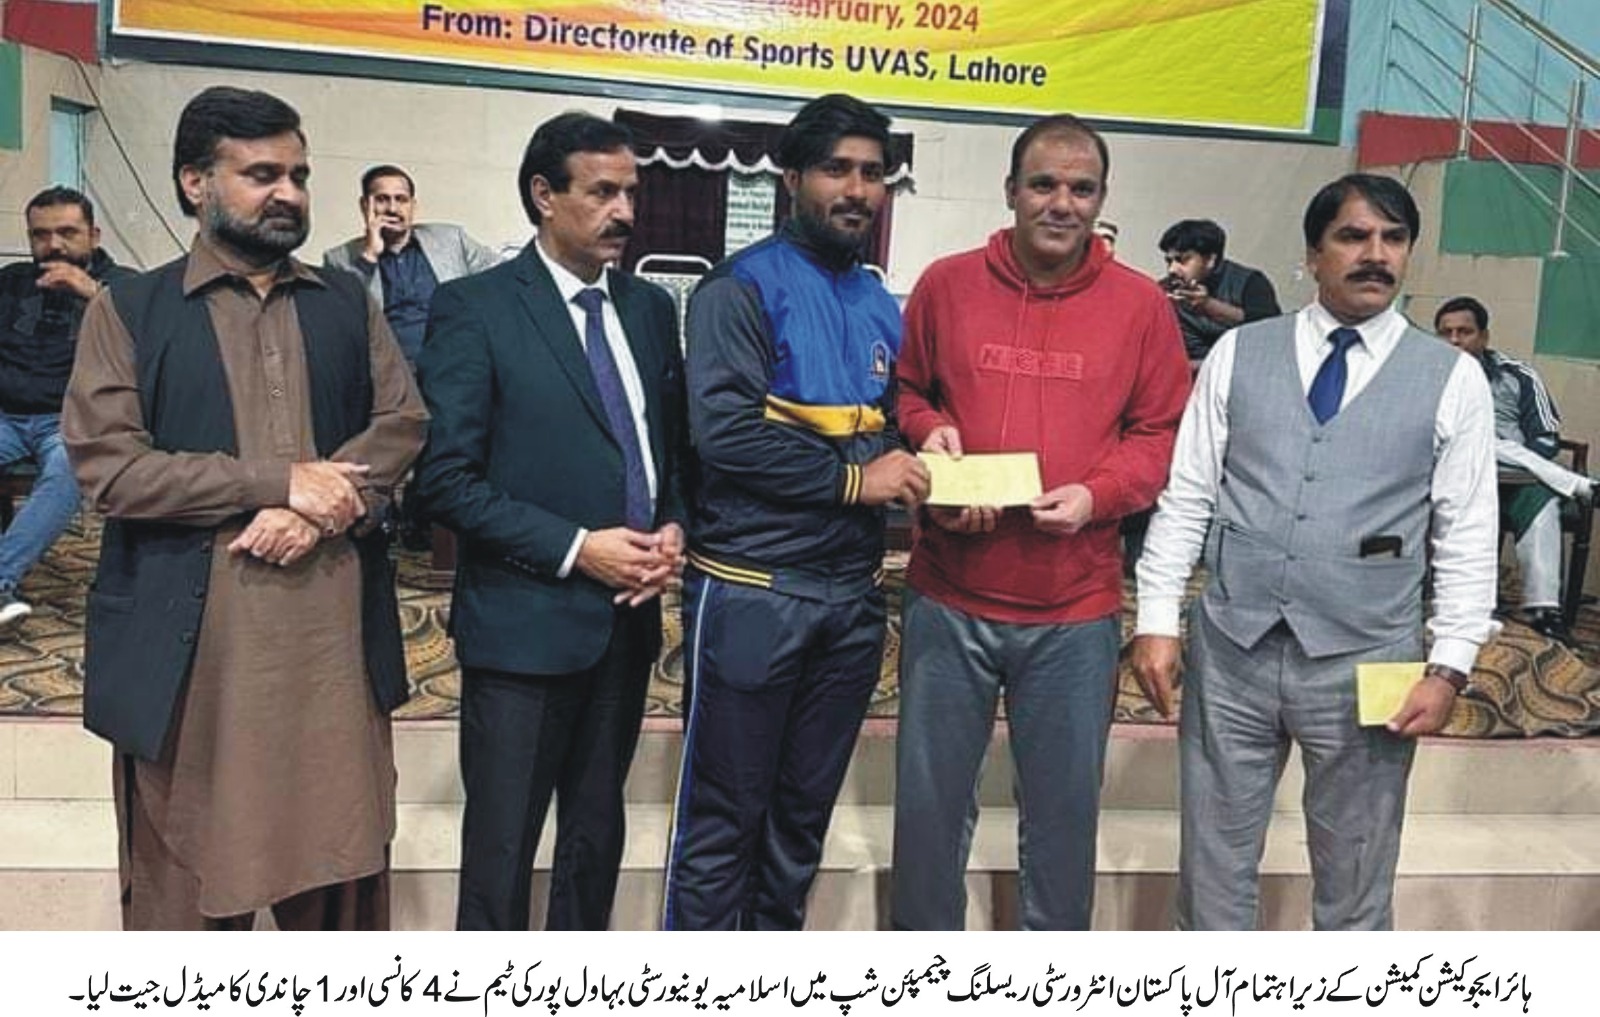 IUB win medal intervarsity wrestling (urdu)